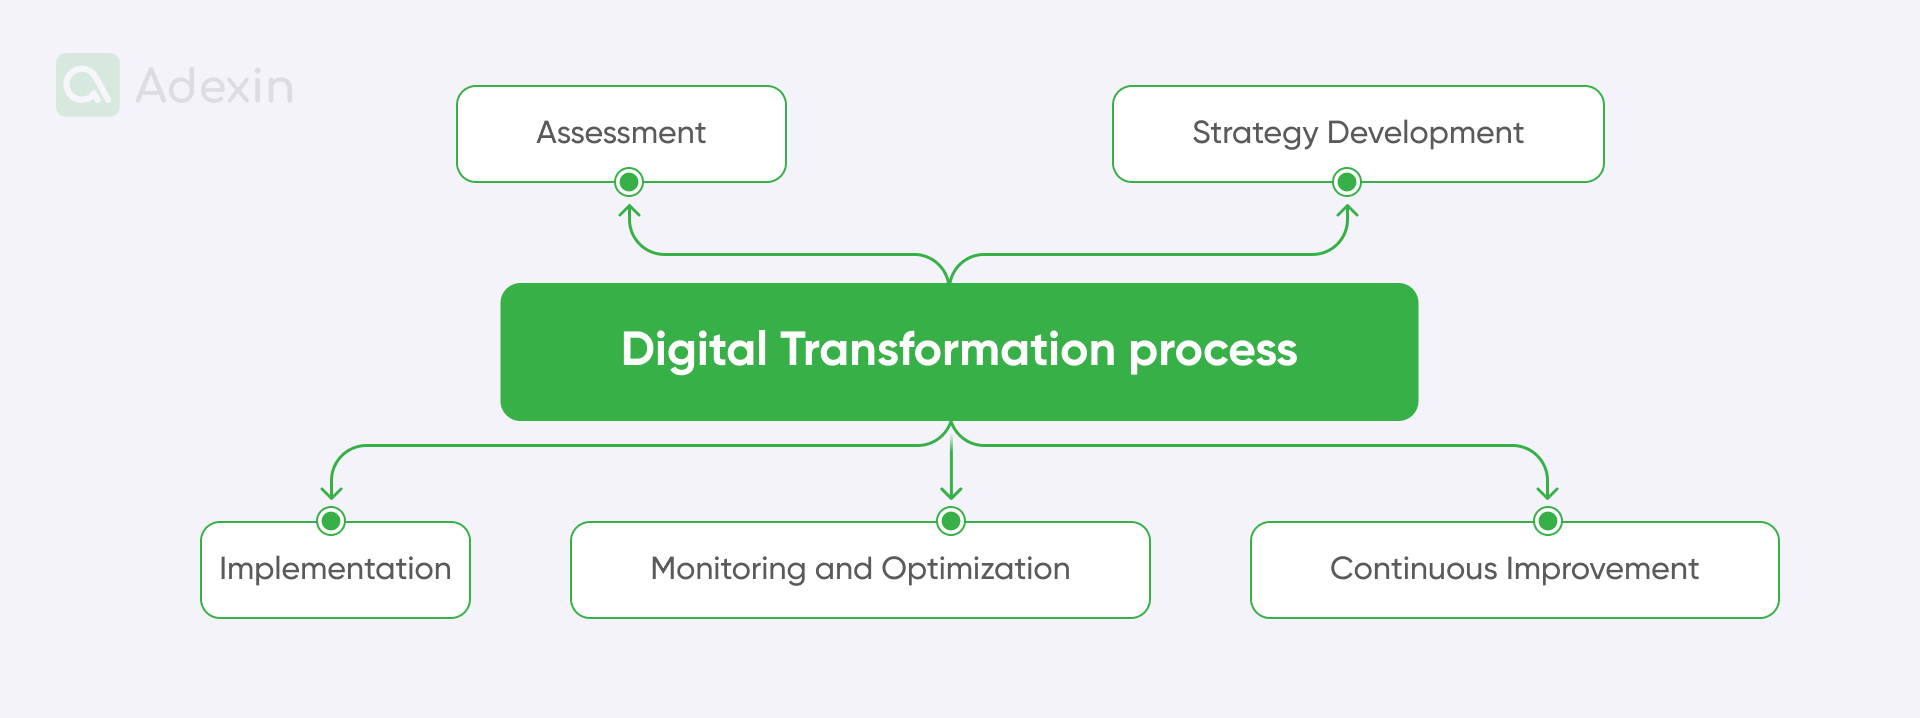 Digital transformation process steps